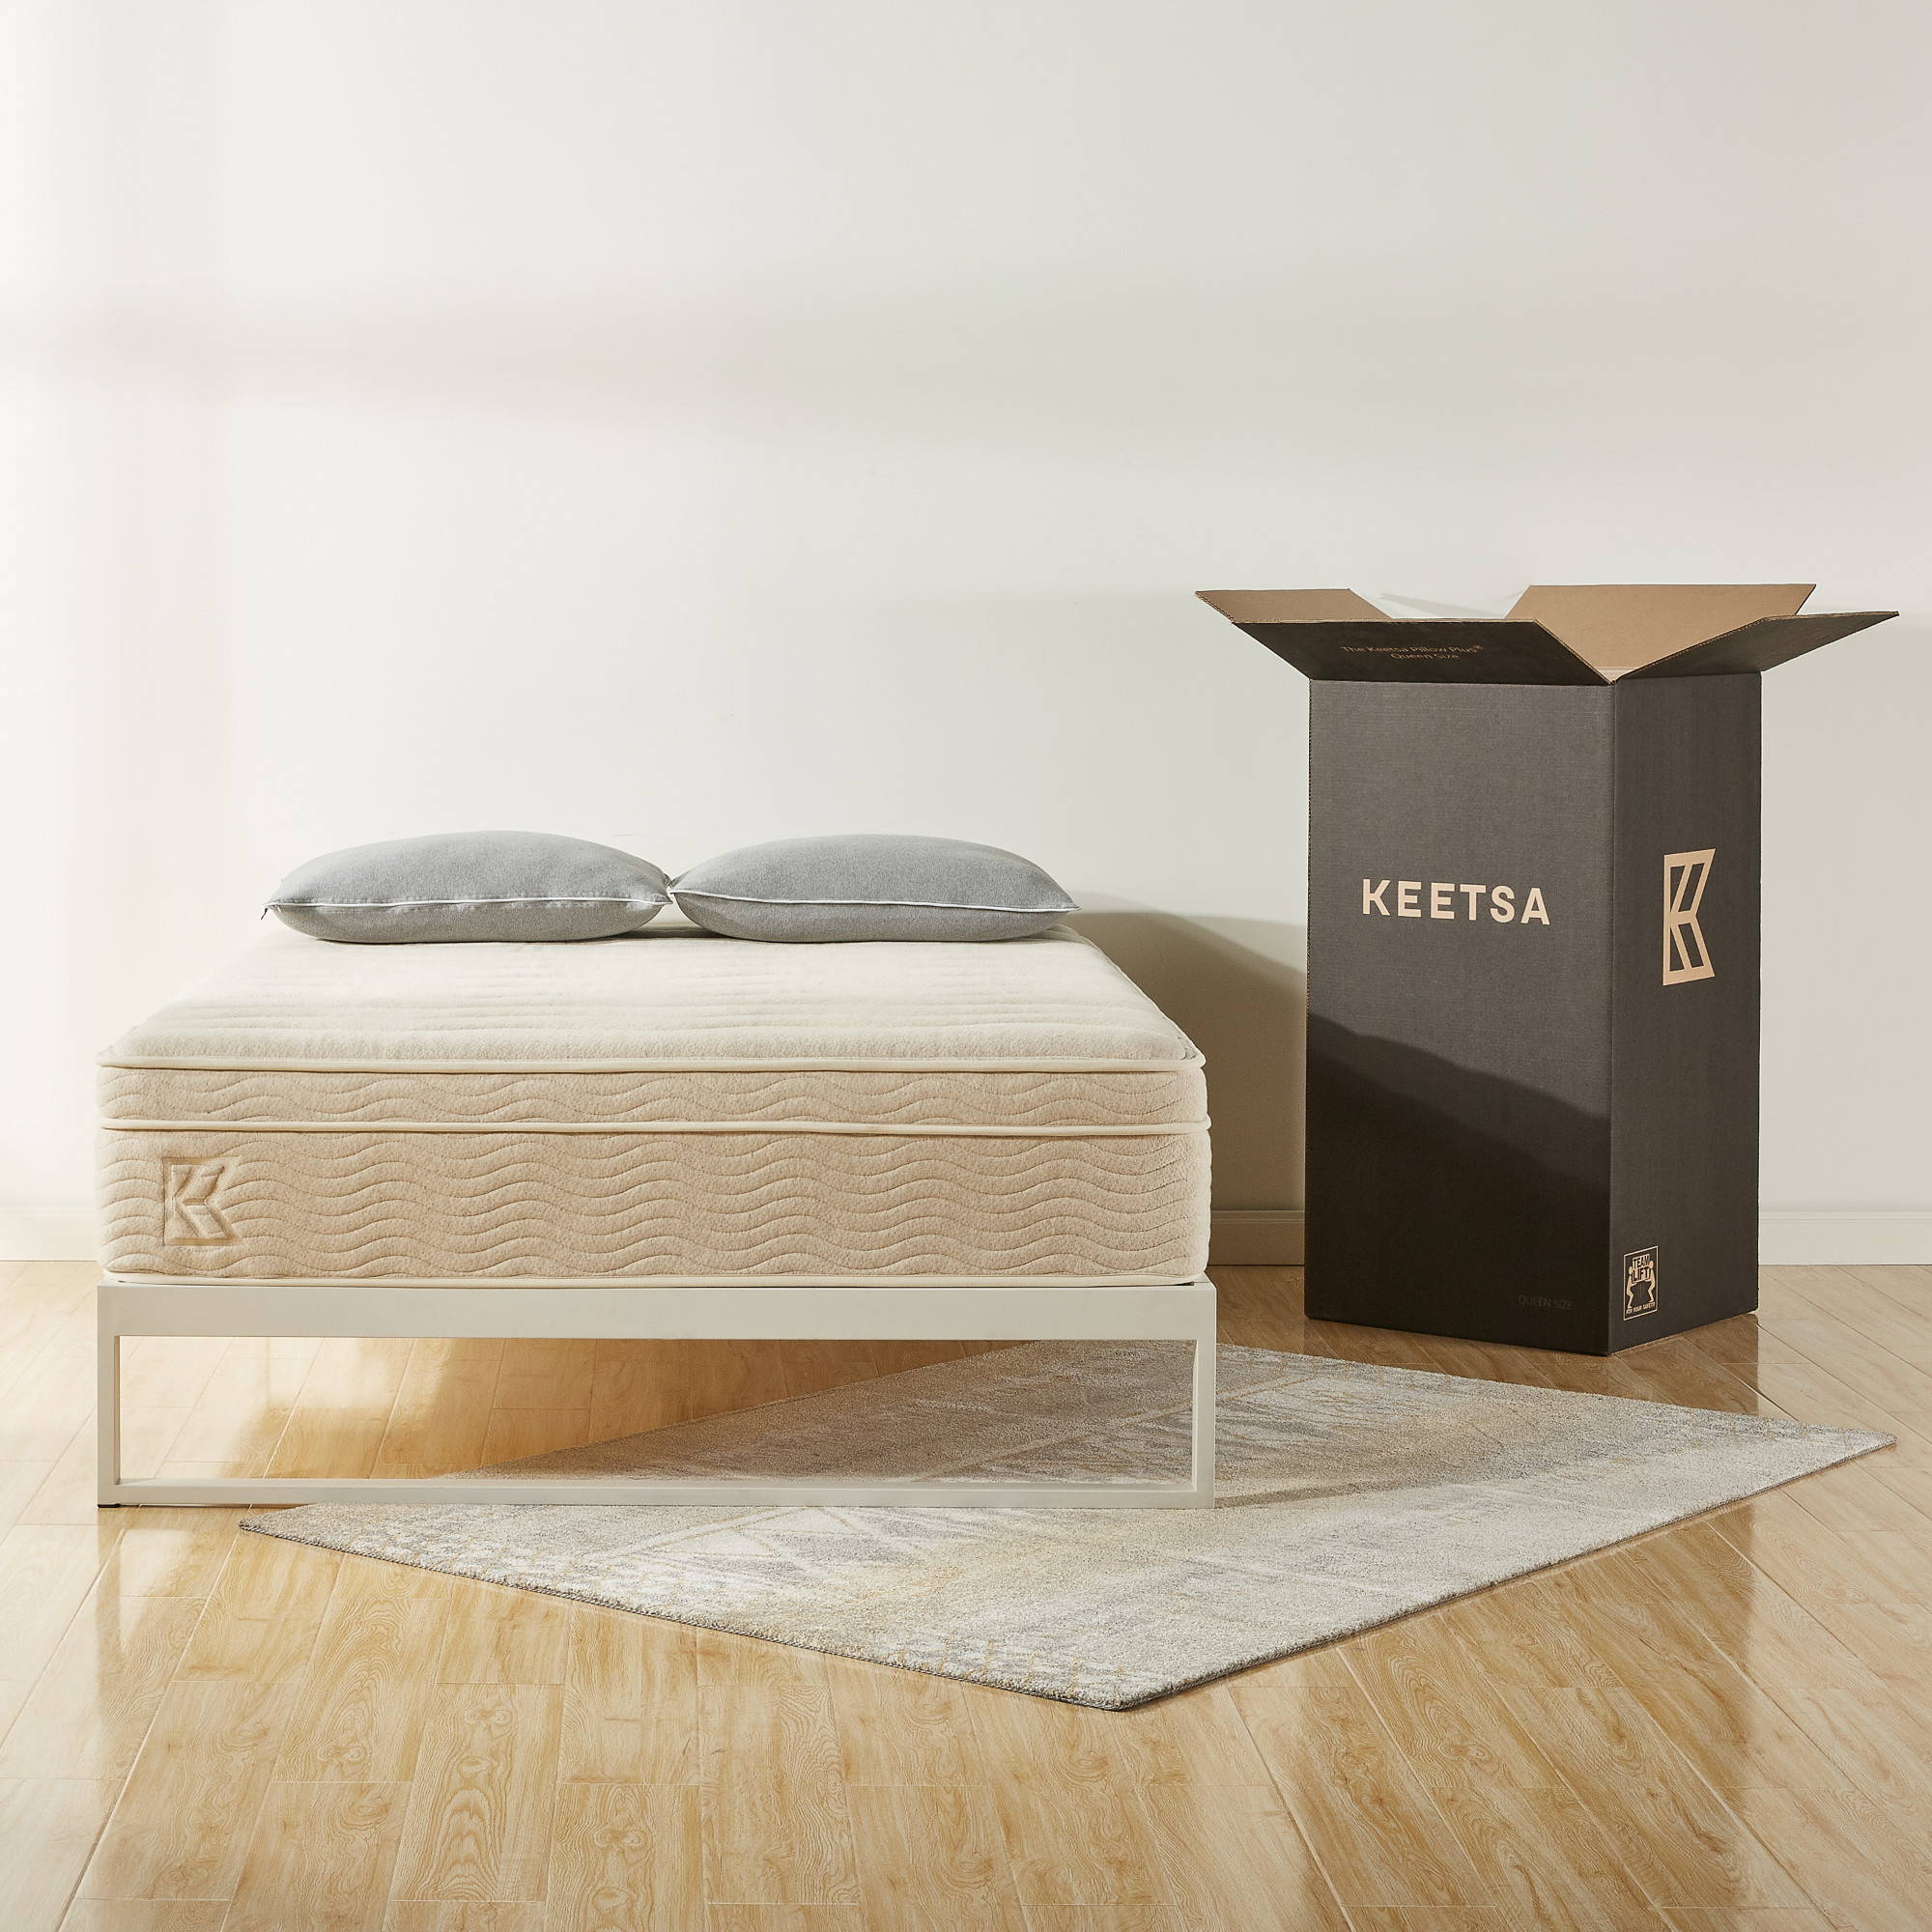 The Keetsa Tea Leaf Classic Mattress in bedroom.